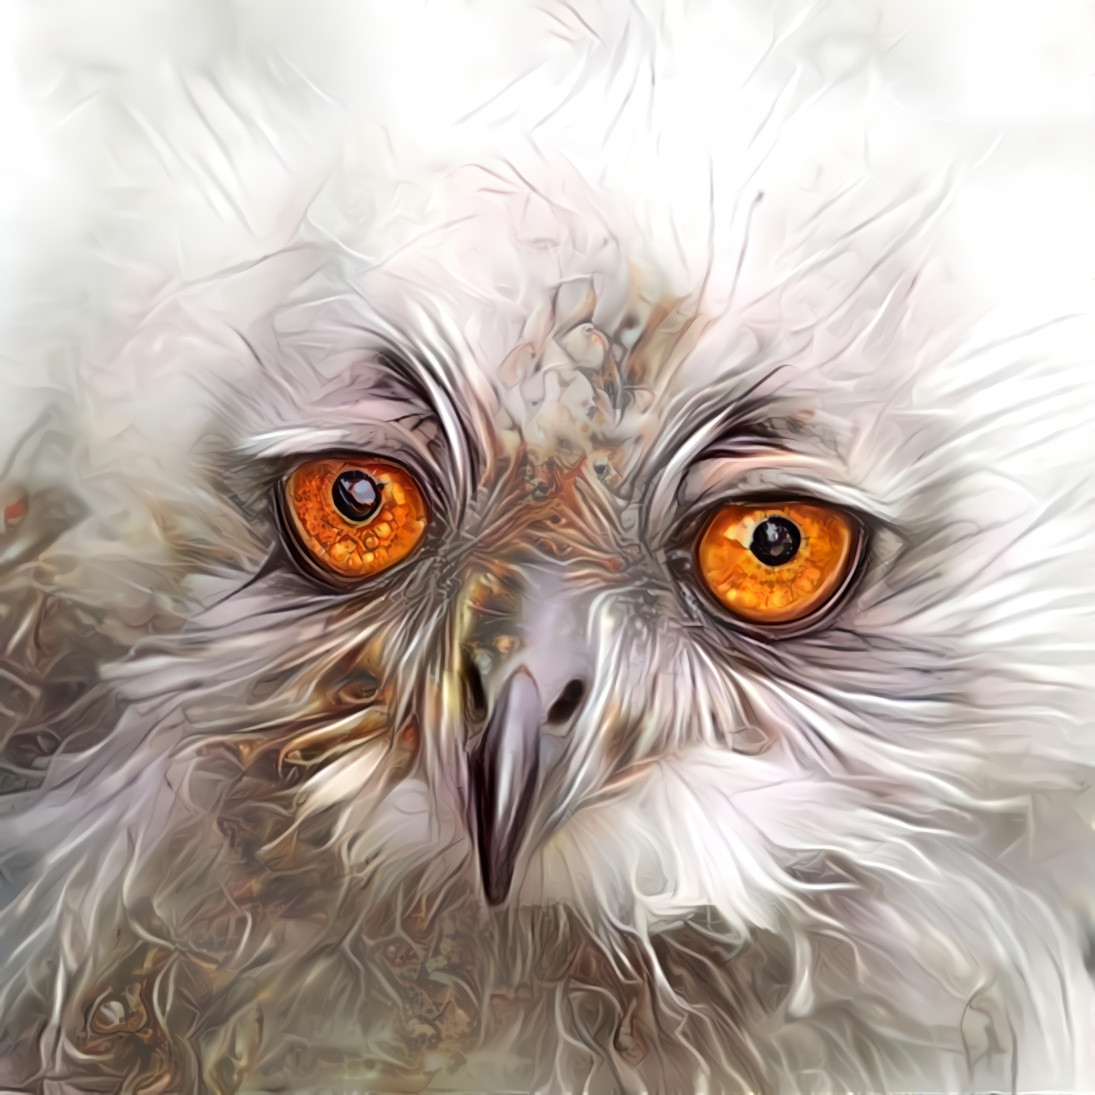 owl chick